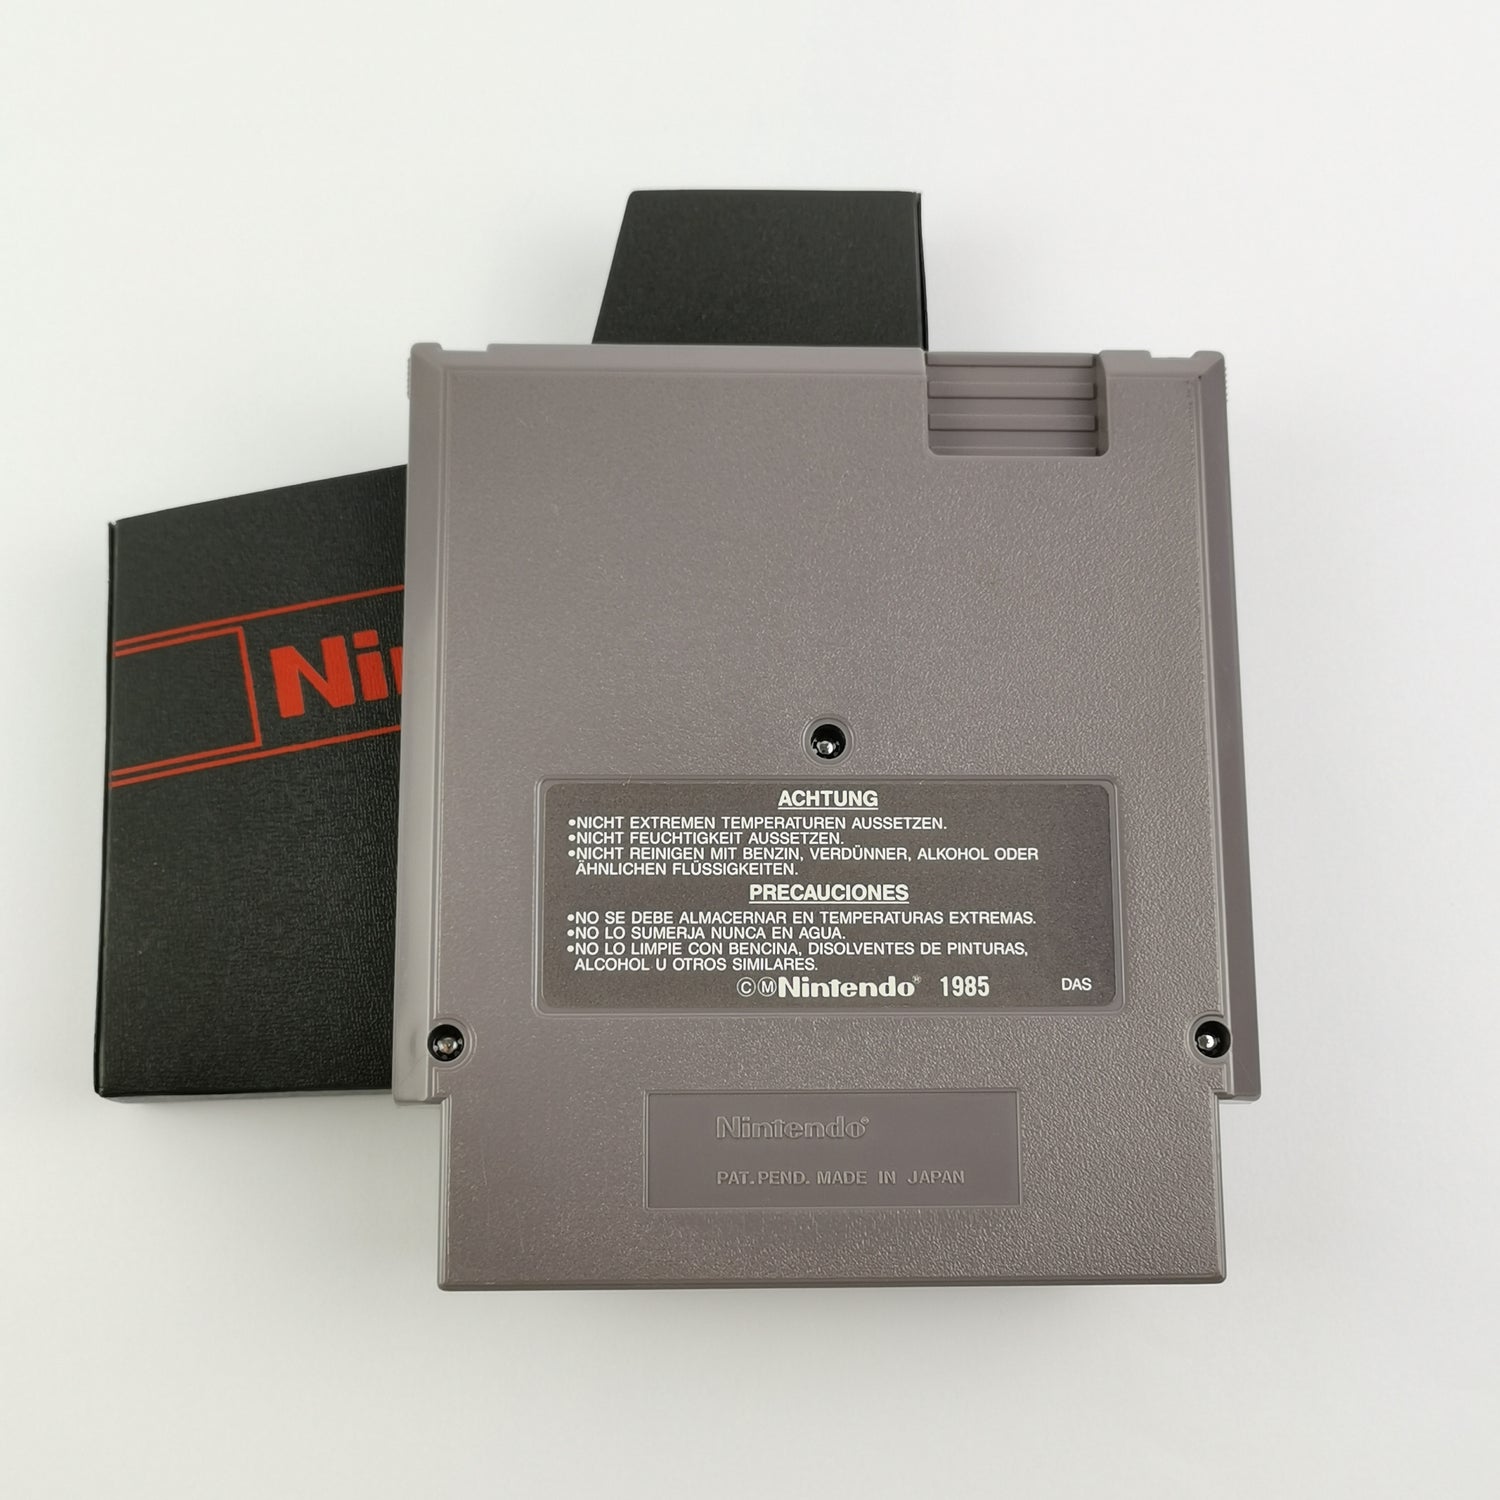 Nintendo NES Spiel : George Foreman´s KO Boxing - Modul / Cartridge | PAL NOE